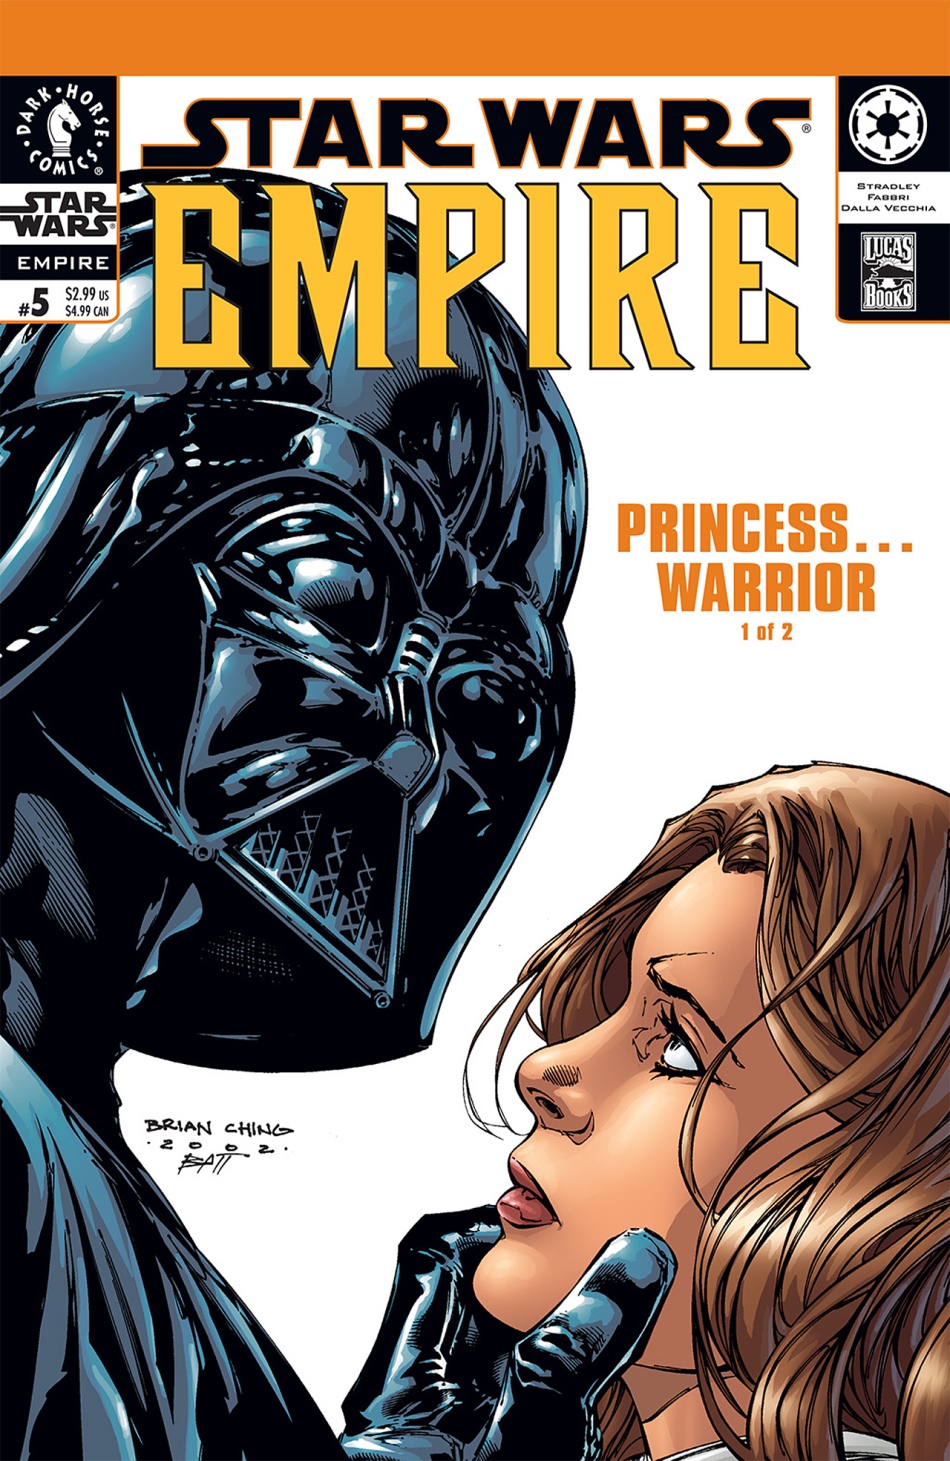 Empire #5: Princess... Warrior, Part 1 (05.02.2003)